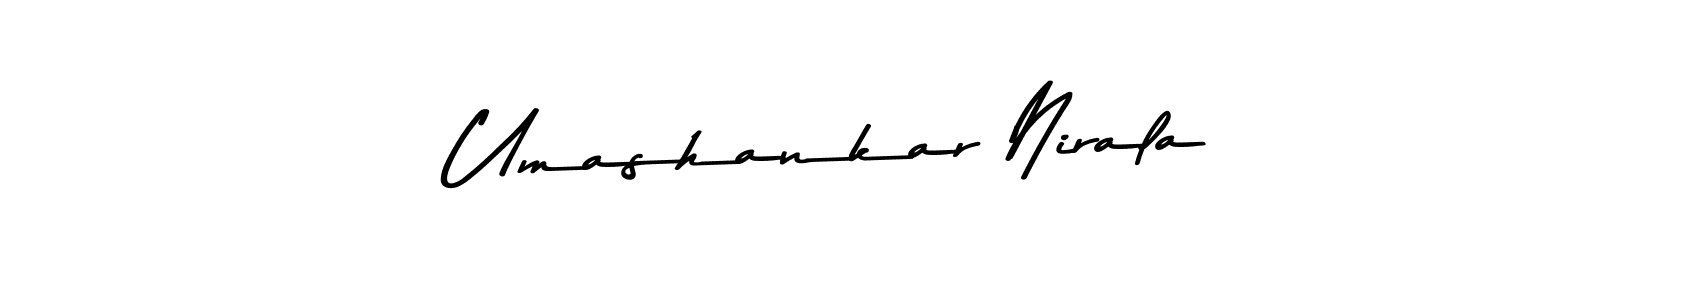 How to Draw Umashankar Nirala signature style? Asem Kandis PERSONAL USE is a latest design signature styles for name Umashankar Nirala. Umashankar Nirala signature style 9 images and pictures png